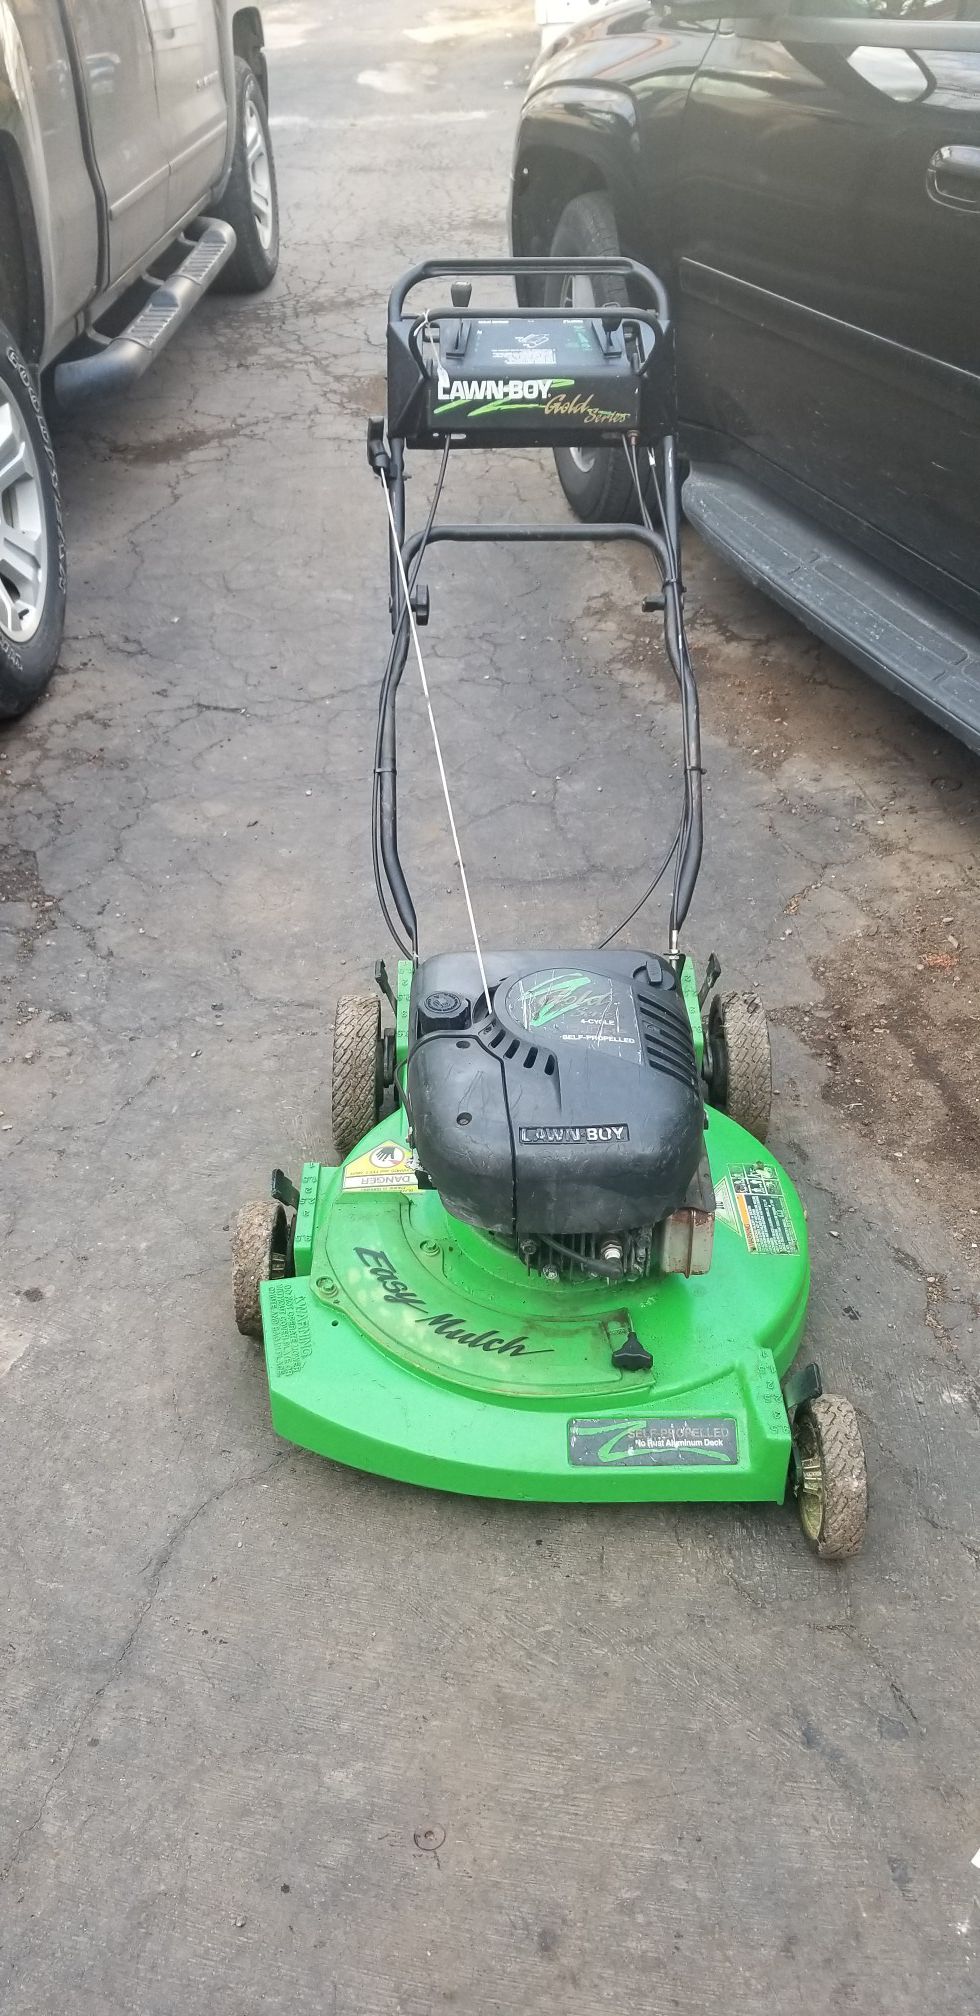 6.0 hp lawn boy self propelled lawn mower